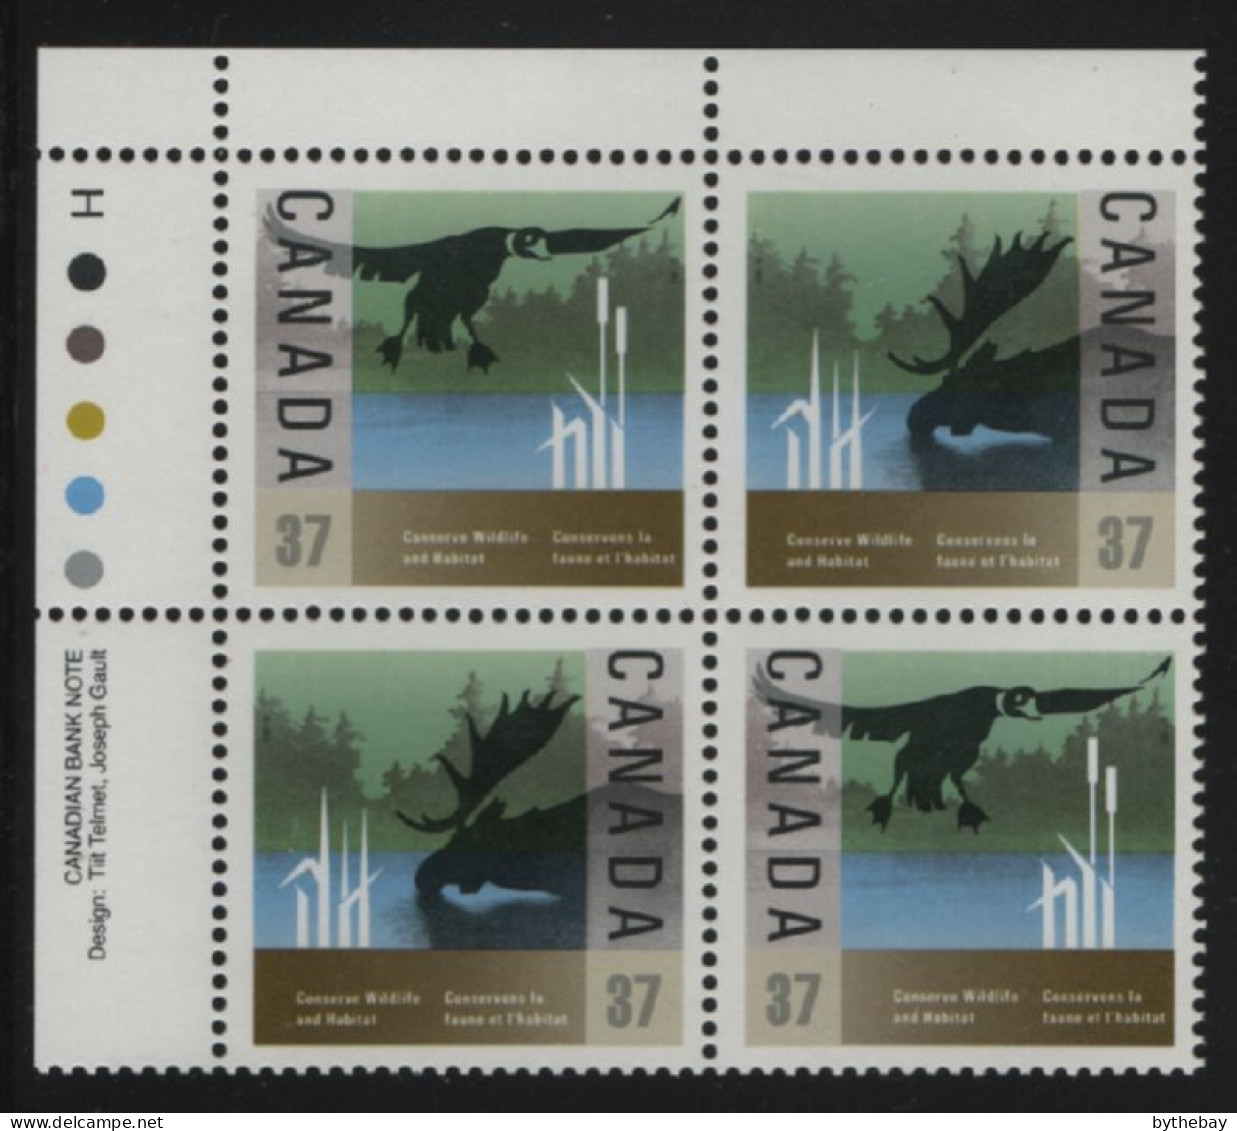 Canada 1988 MNH Sc 1205a 37c Duck, Moose UL Plate Block - Plate Number & Inscriptions